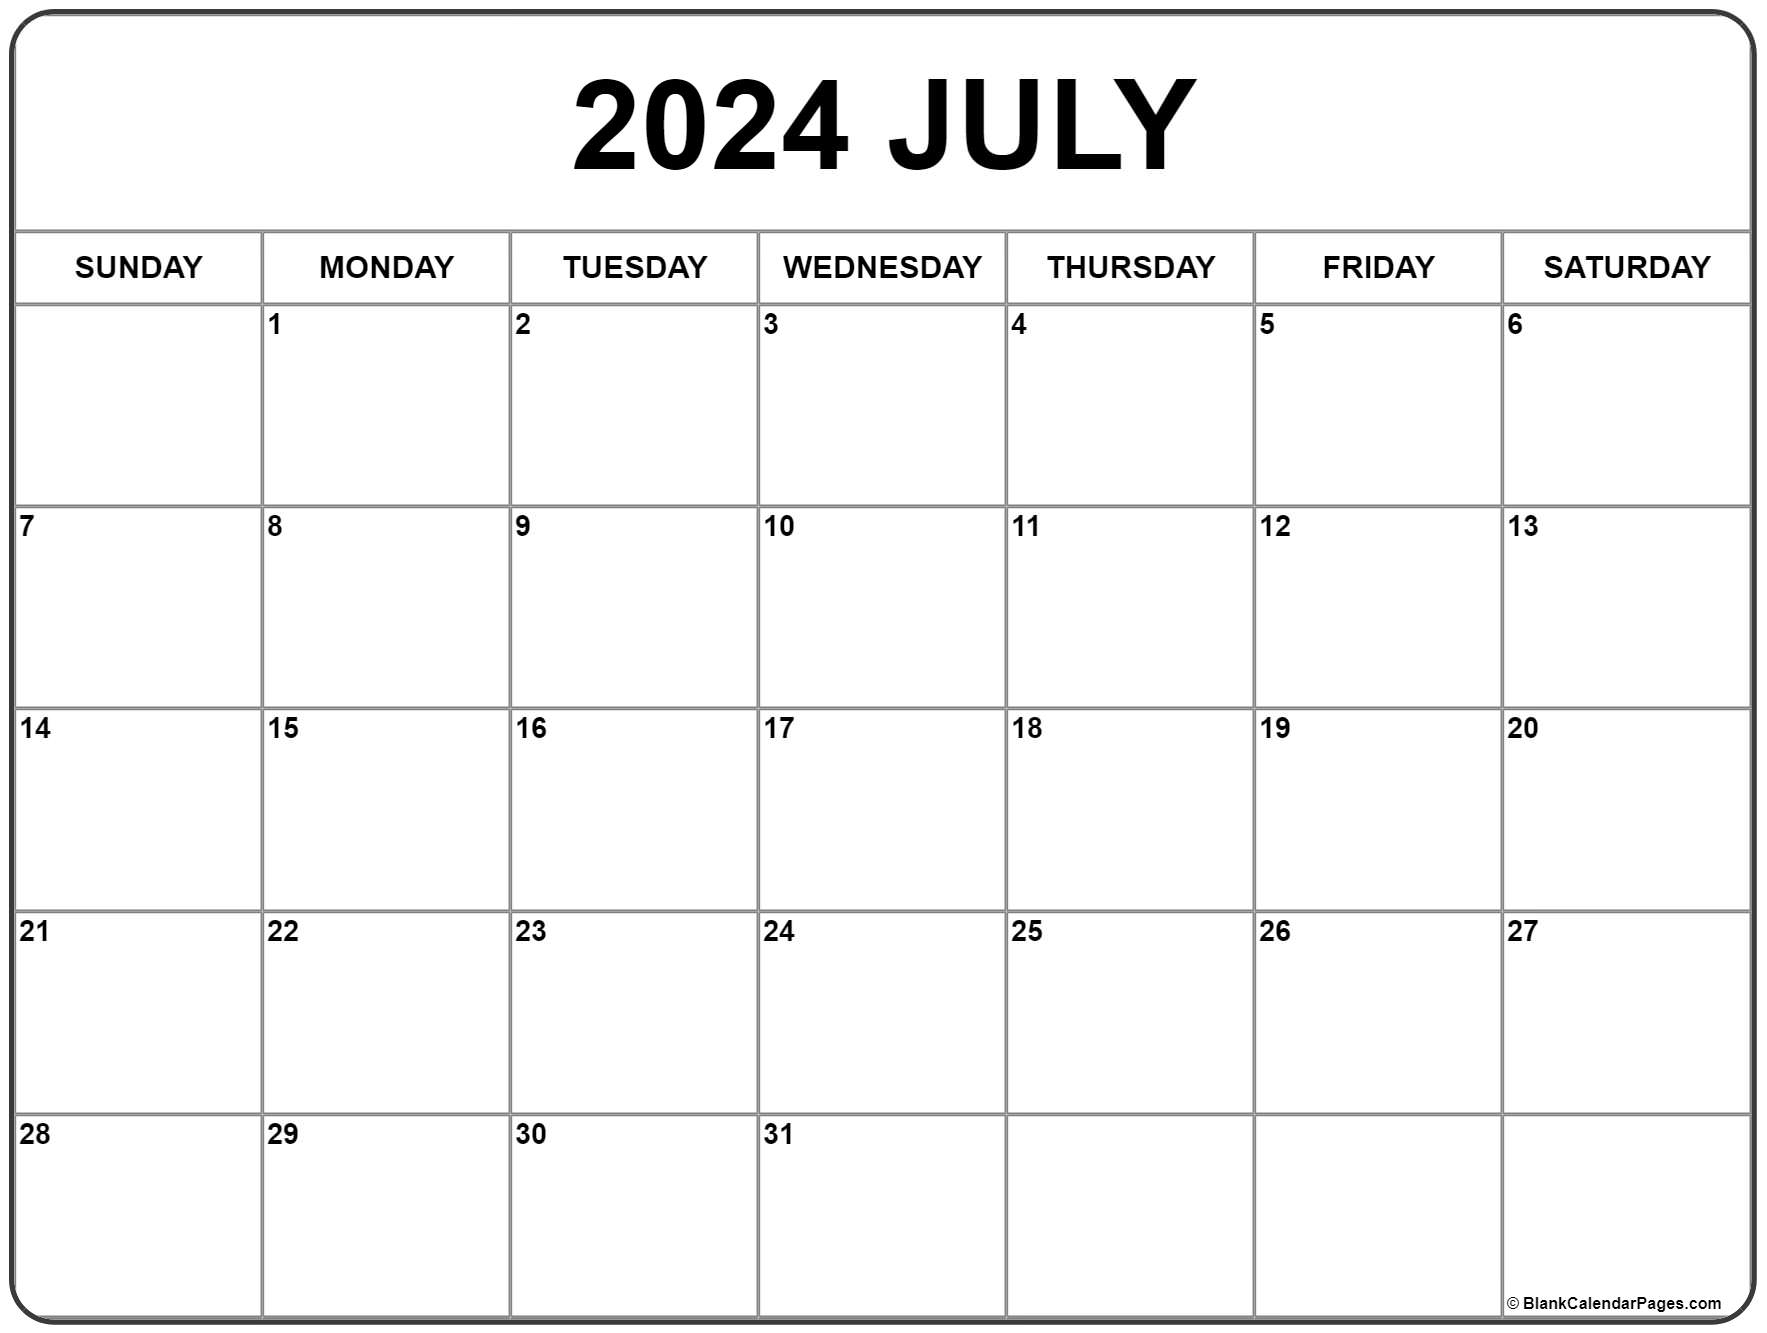 2021 Summer Calendar July 2021 calendar | free printable monthly calendars